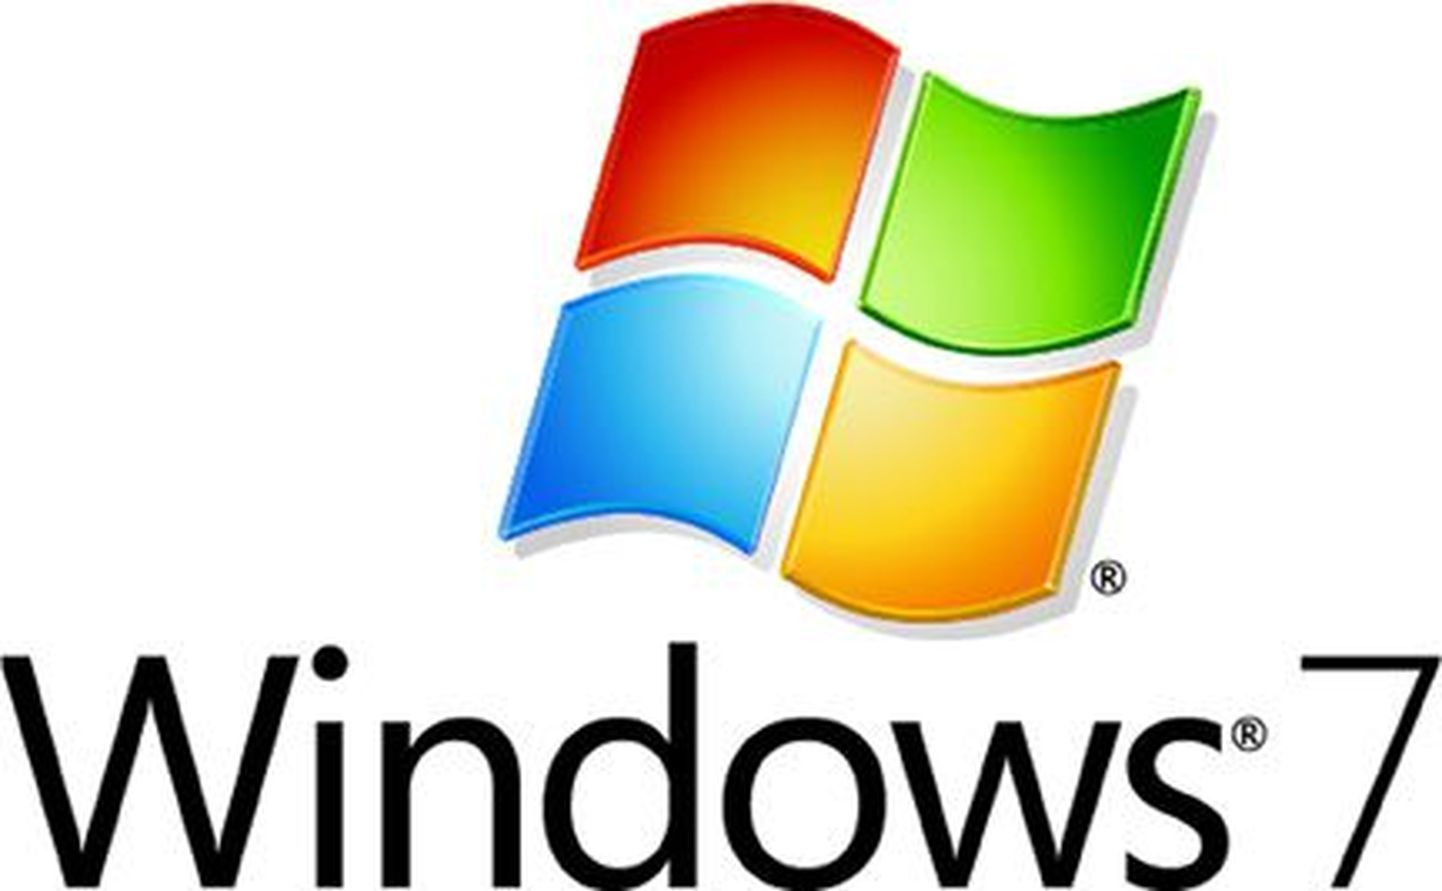 Windows 7 logo.